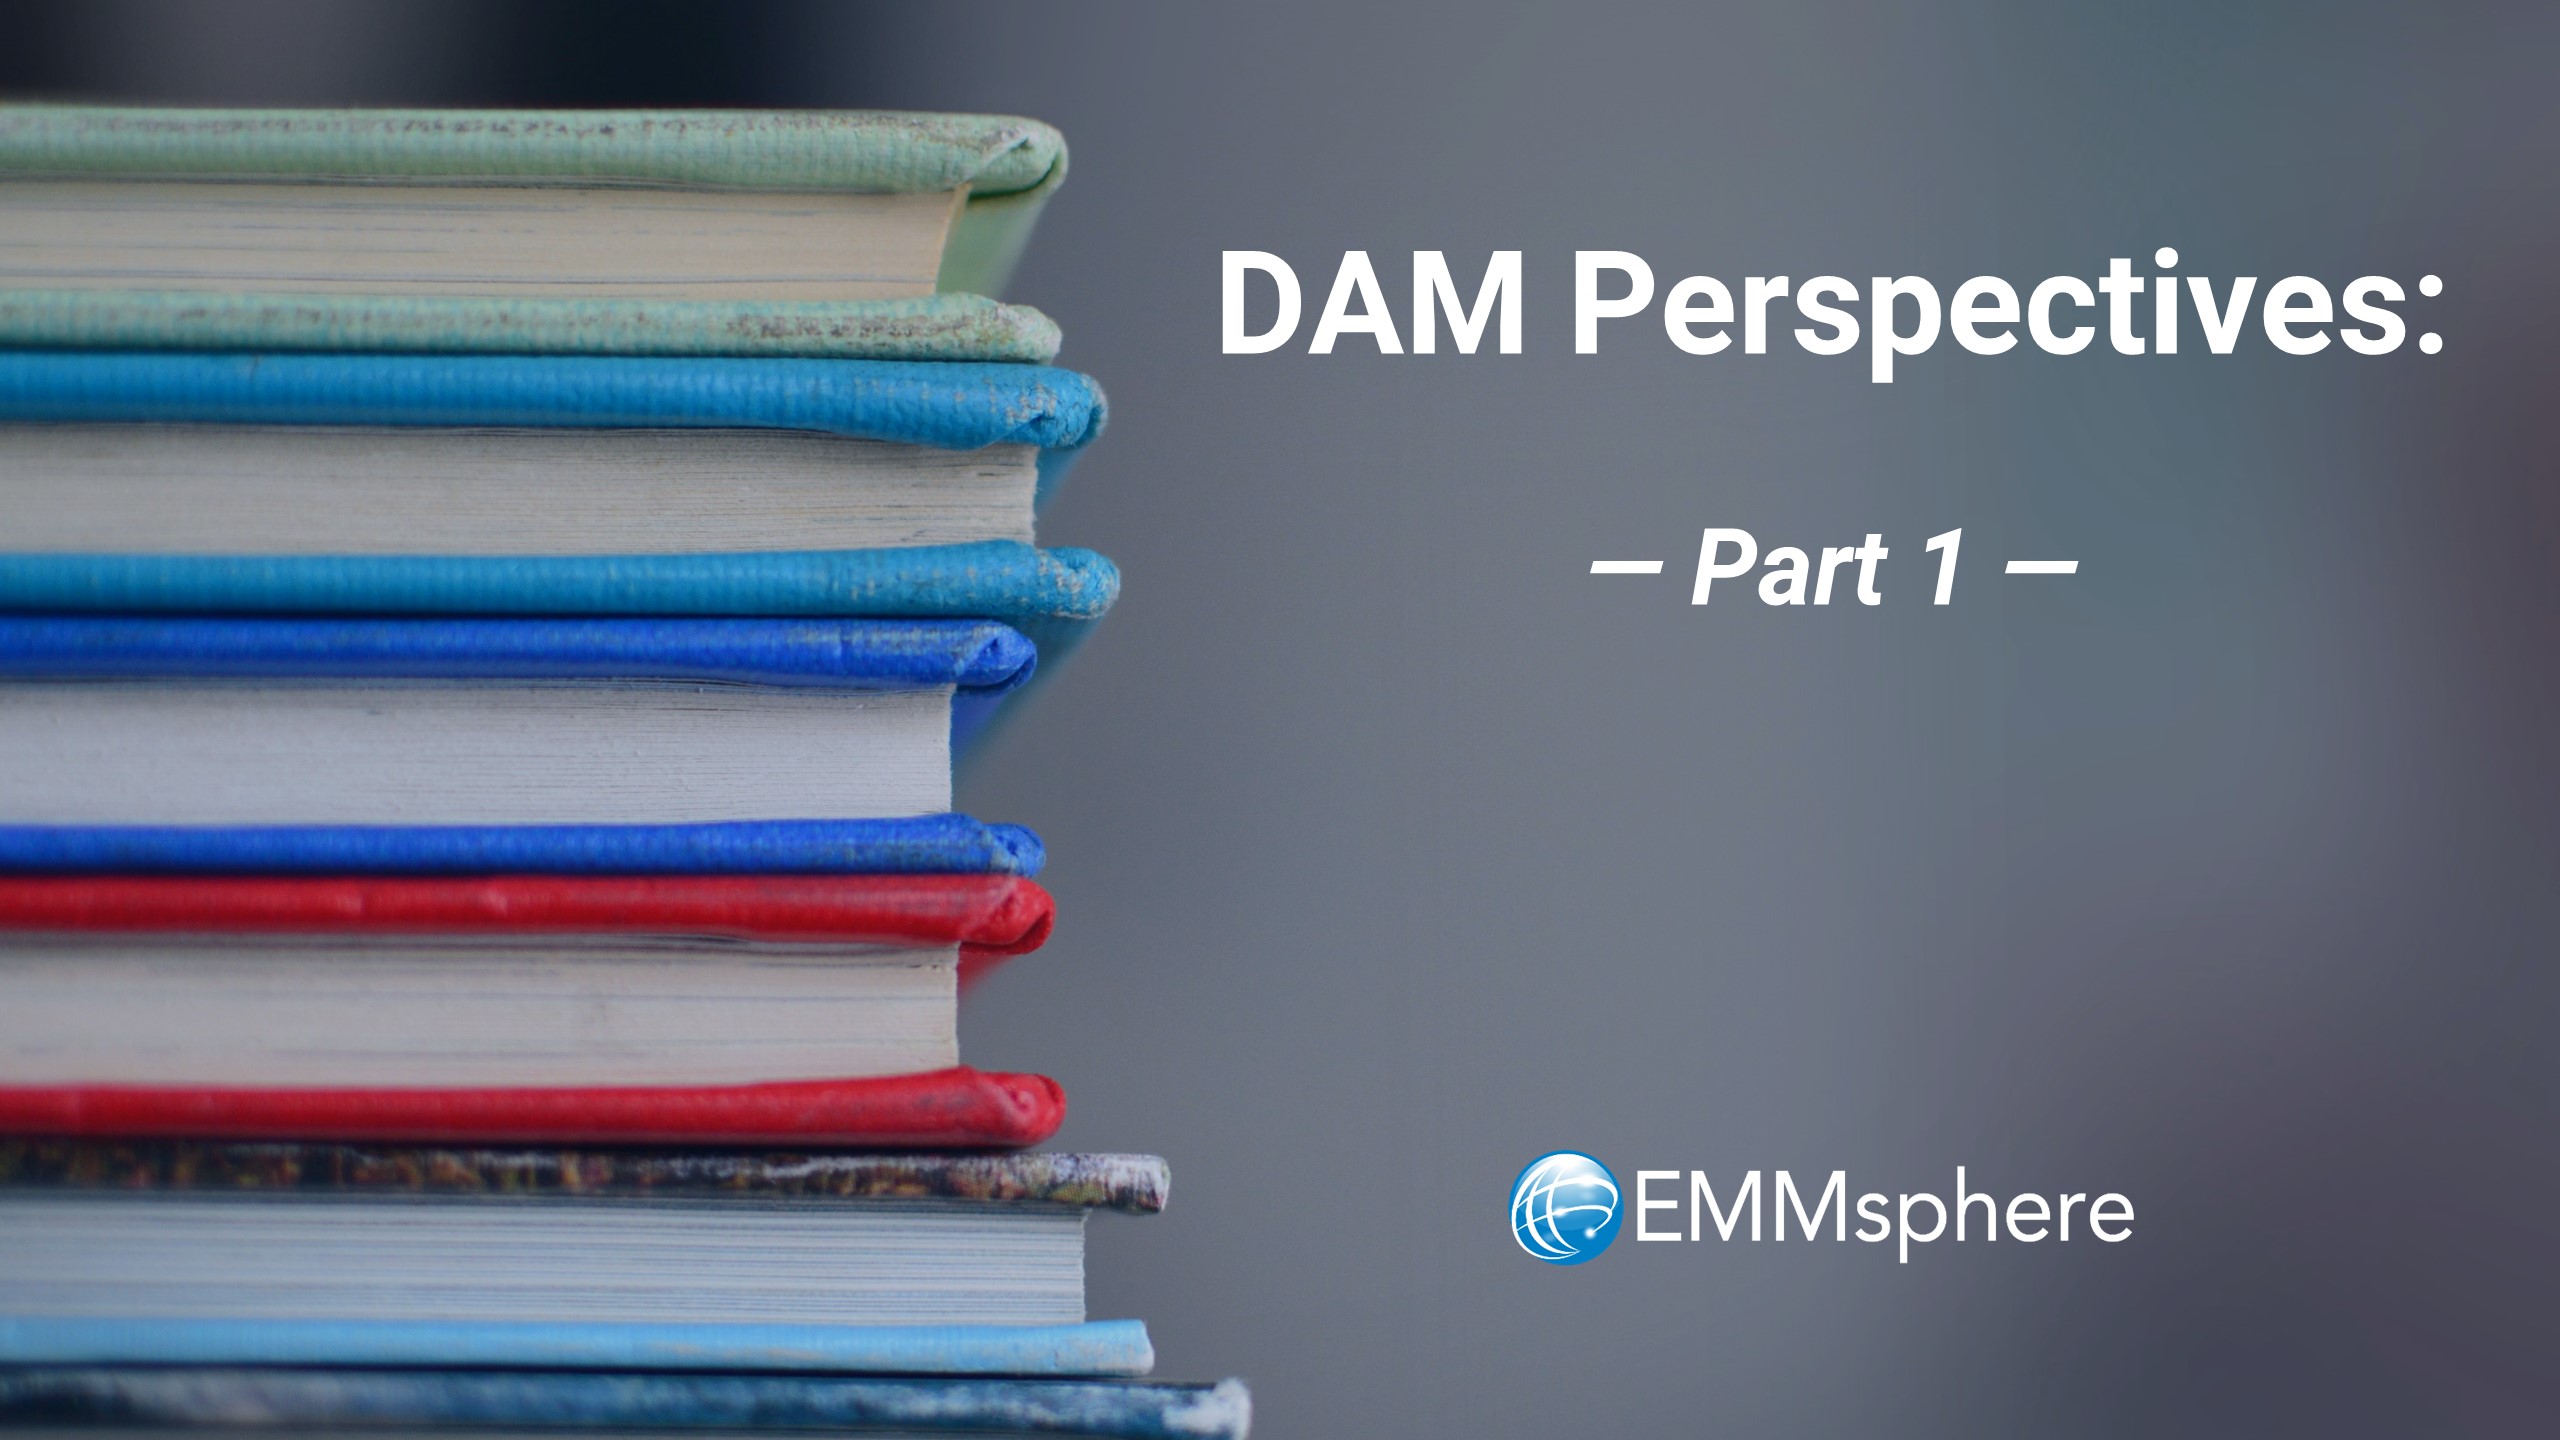 DAM Perspectives - Part 1